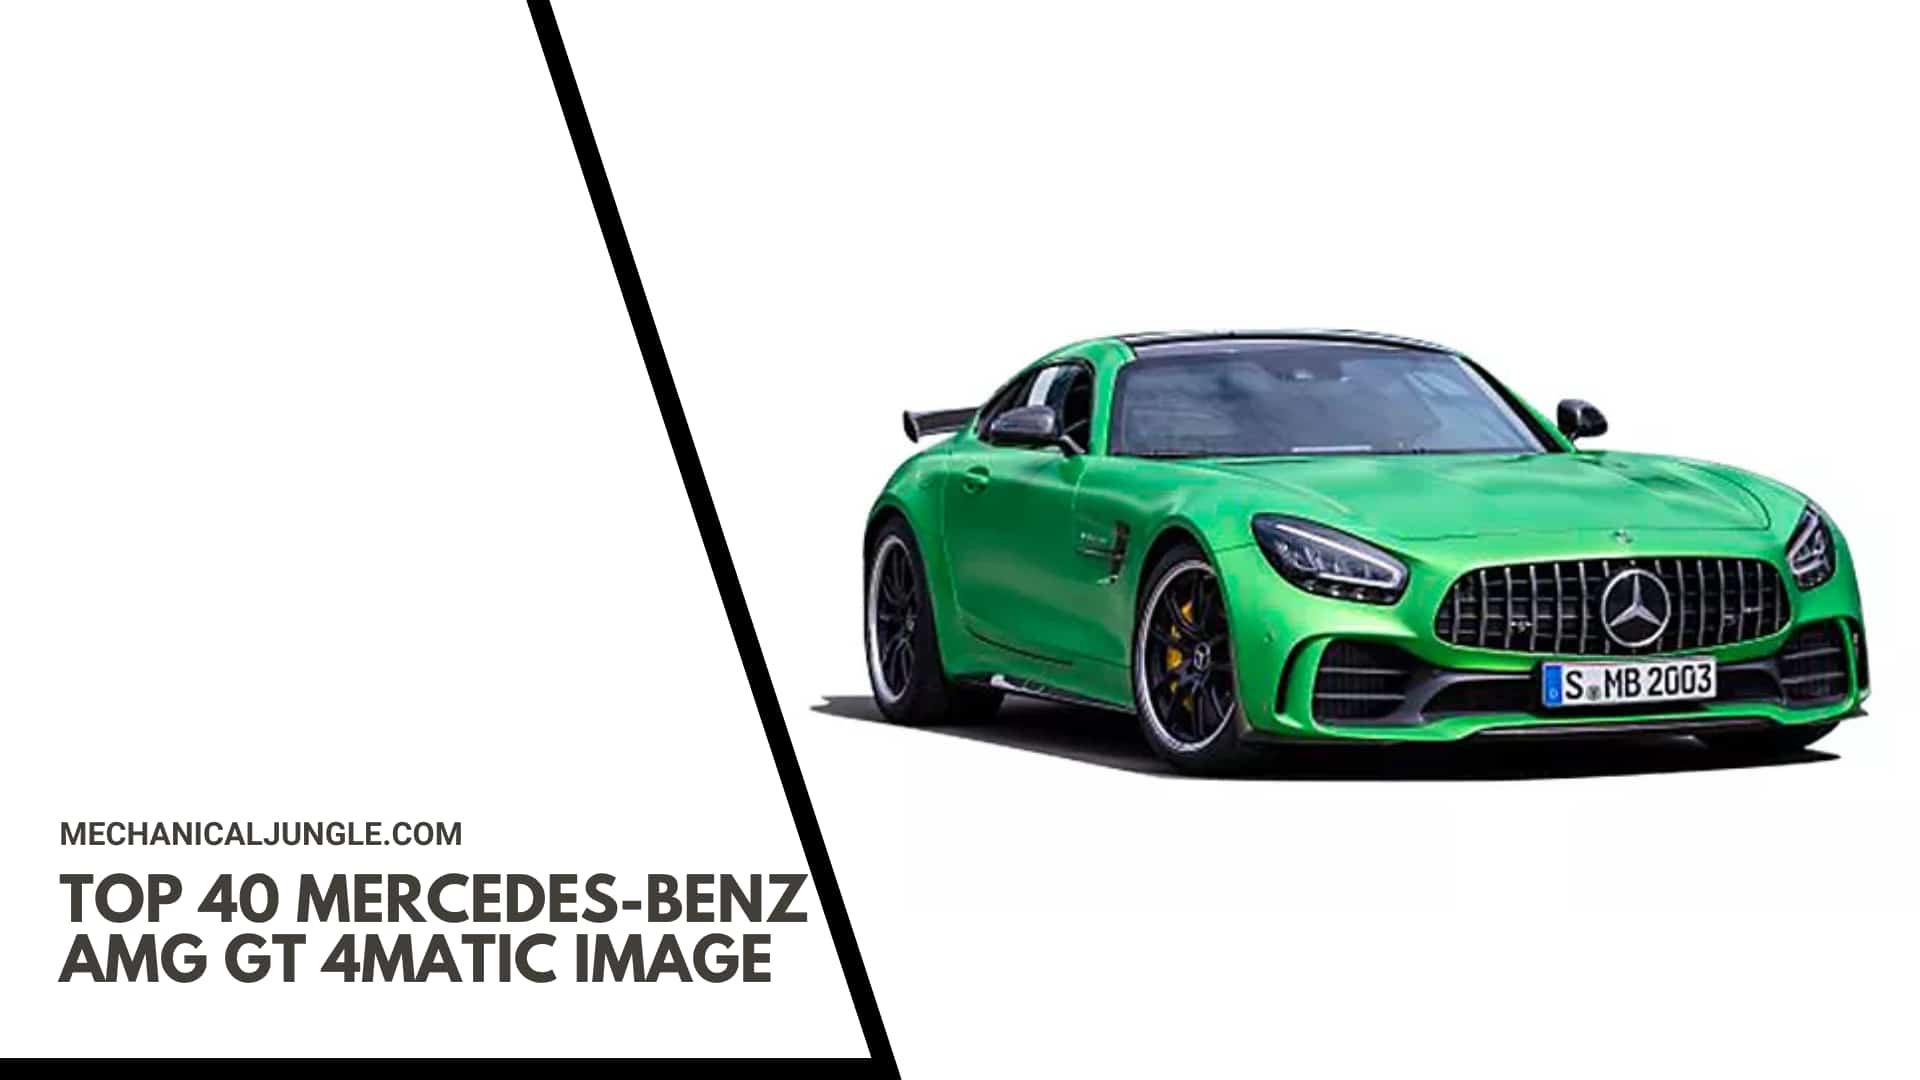 Top 40 Mercedes-Benz AMG GT 4MATIC Image